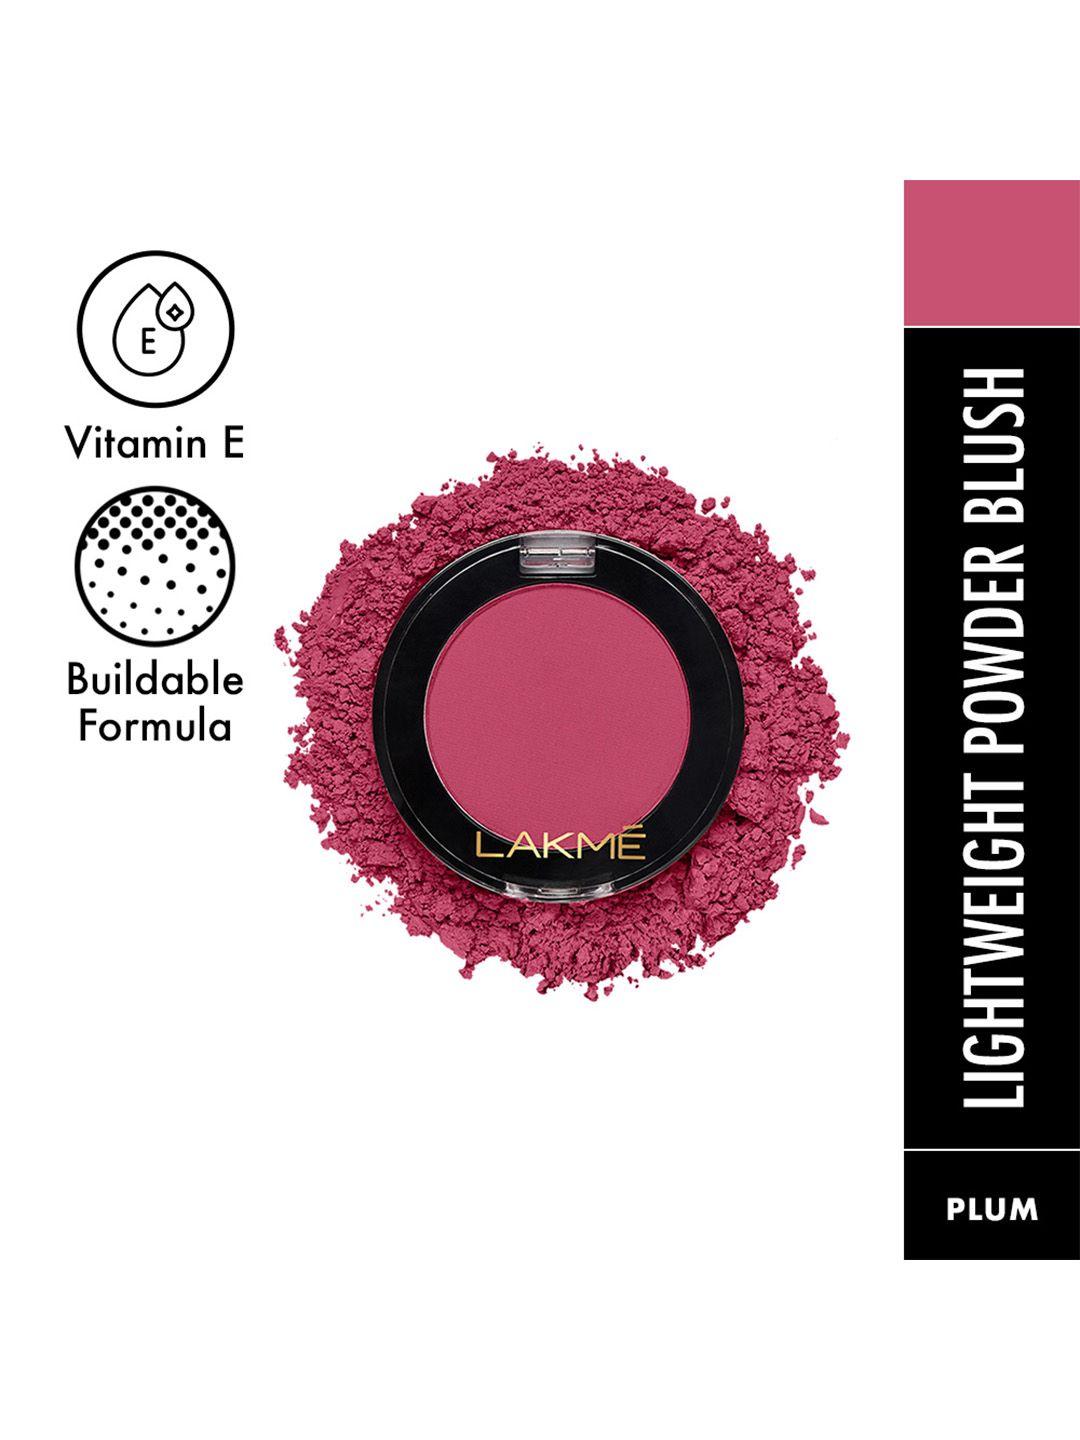 lakme face it lightweight powder blush with vitamin e 4 g - perfect plum b3